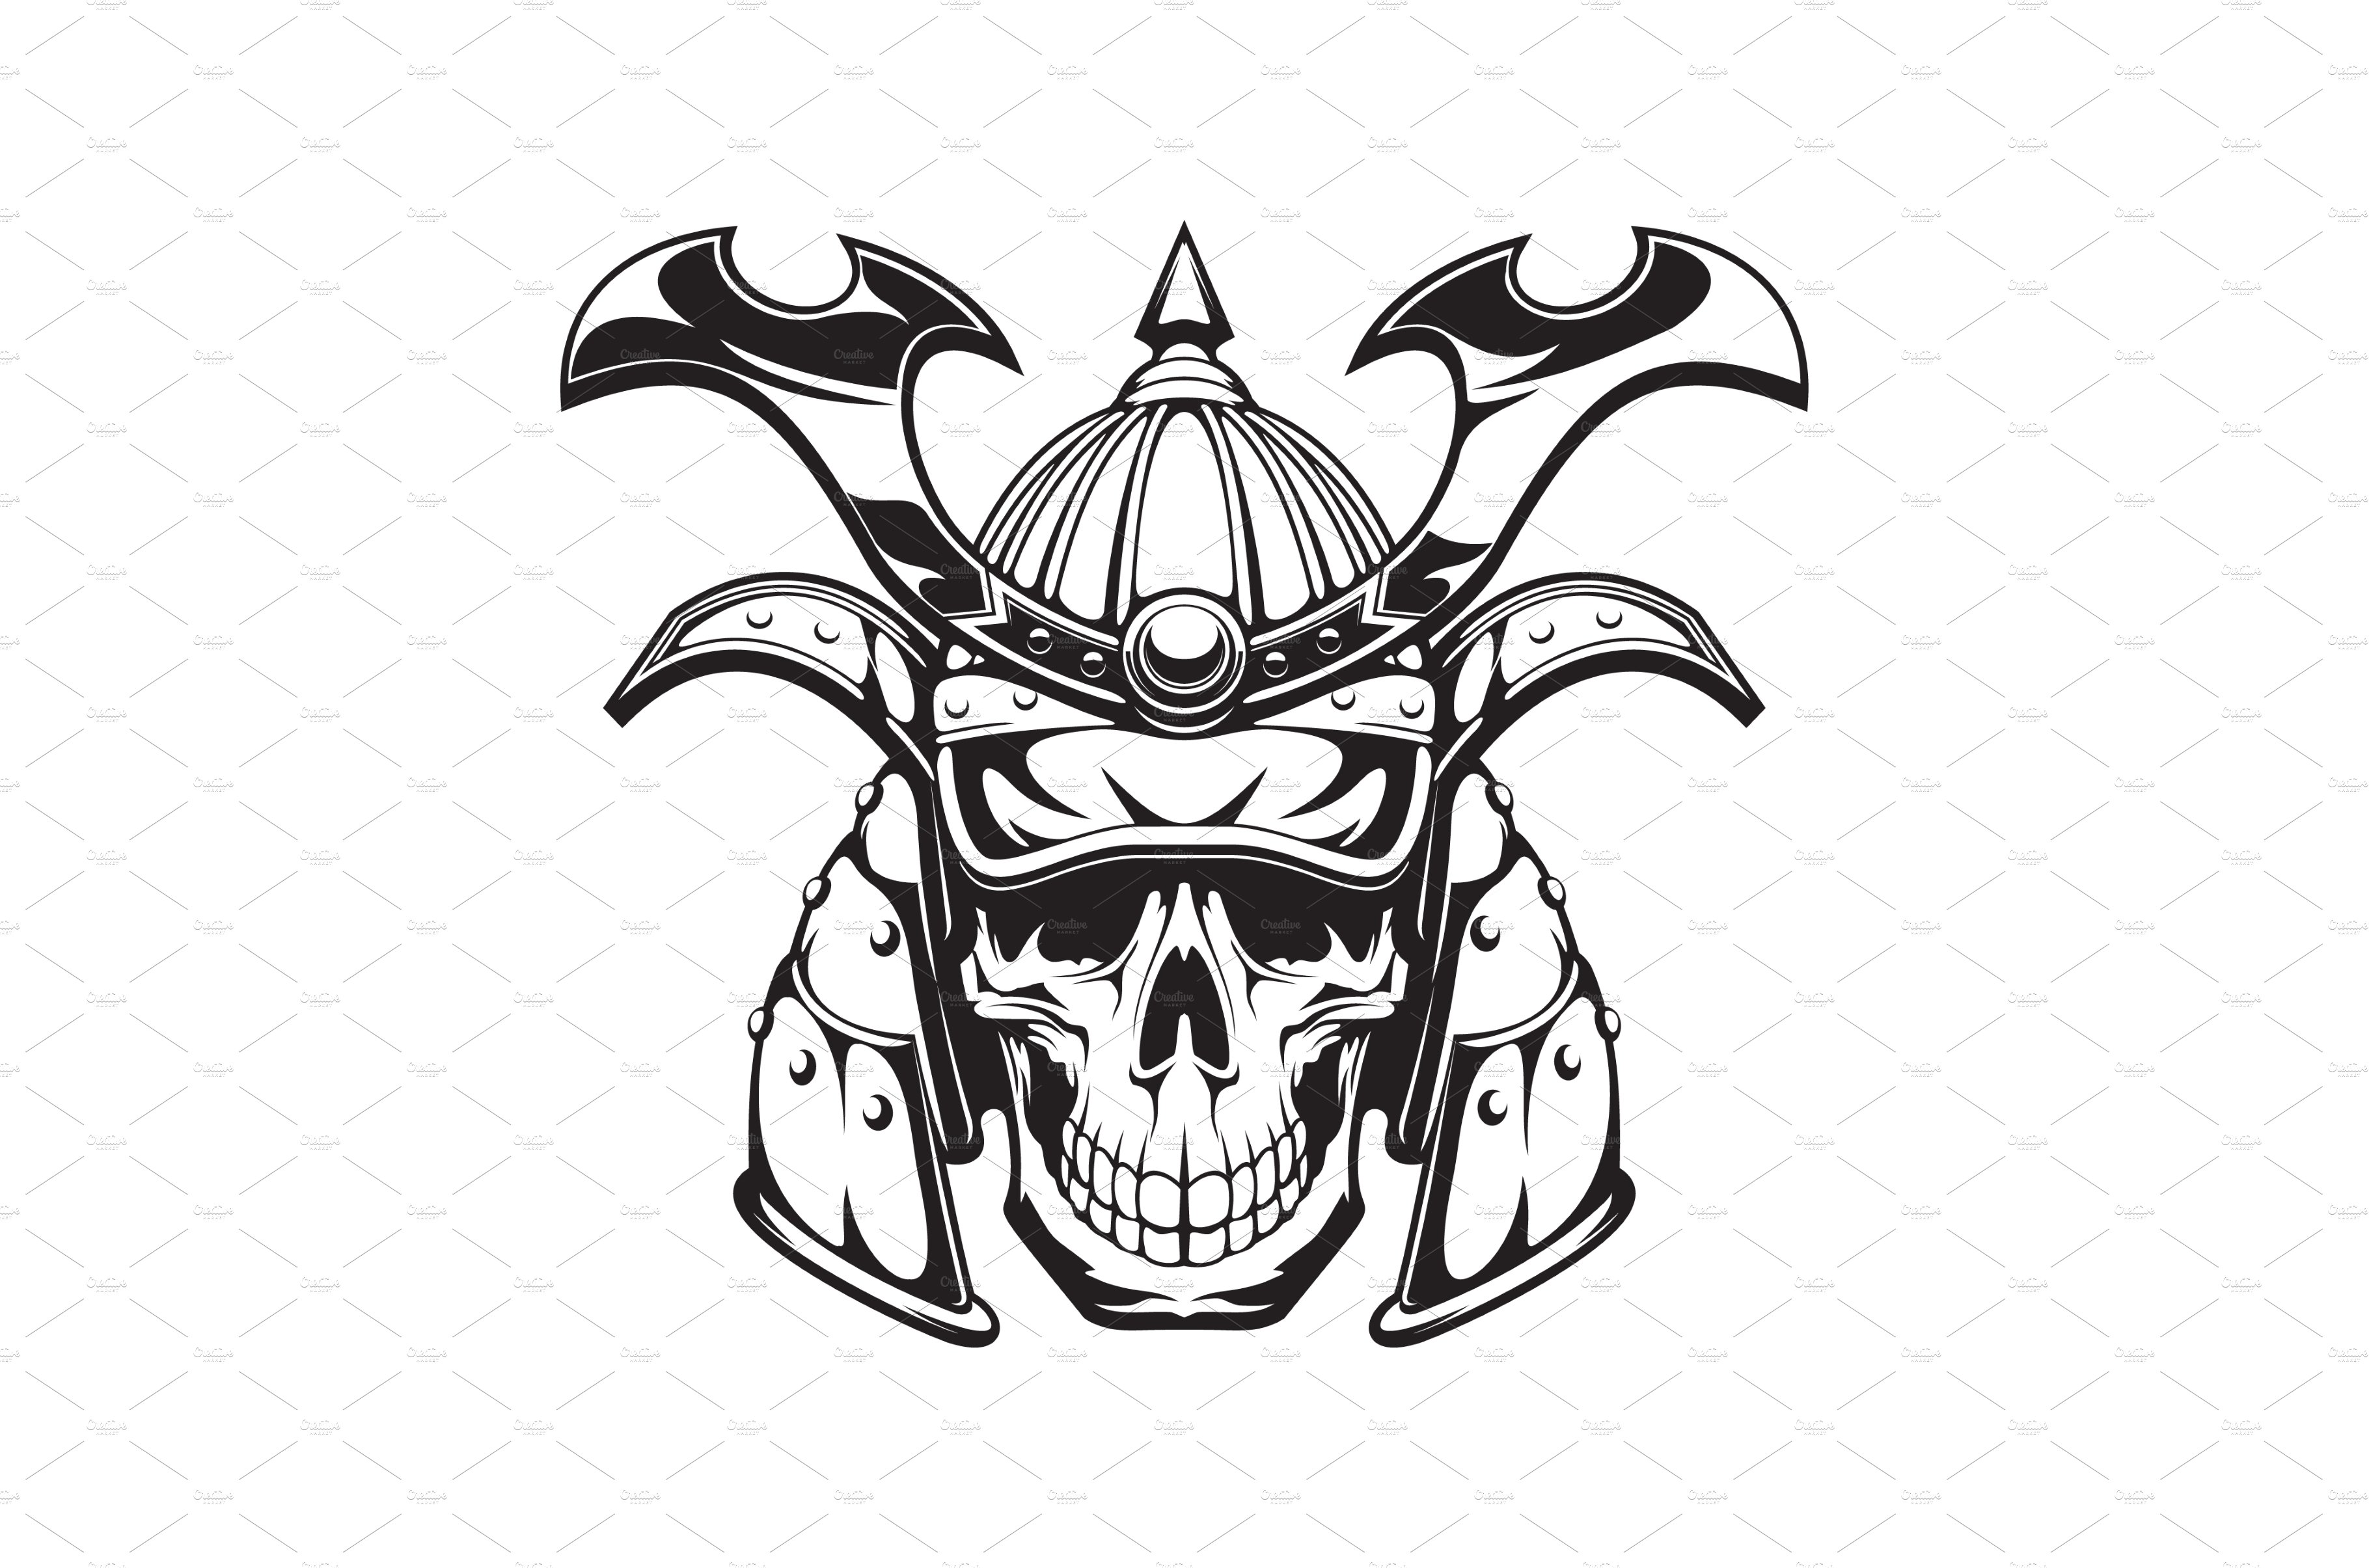 Set Of Warrior Skull Characters Stock Illustration - Download